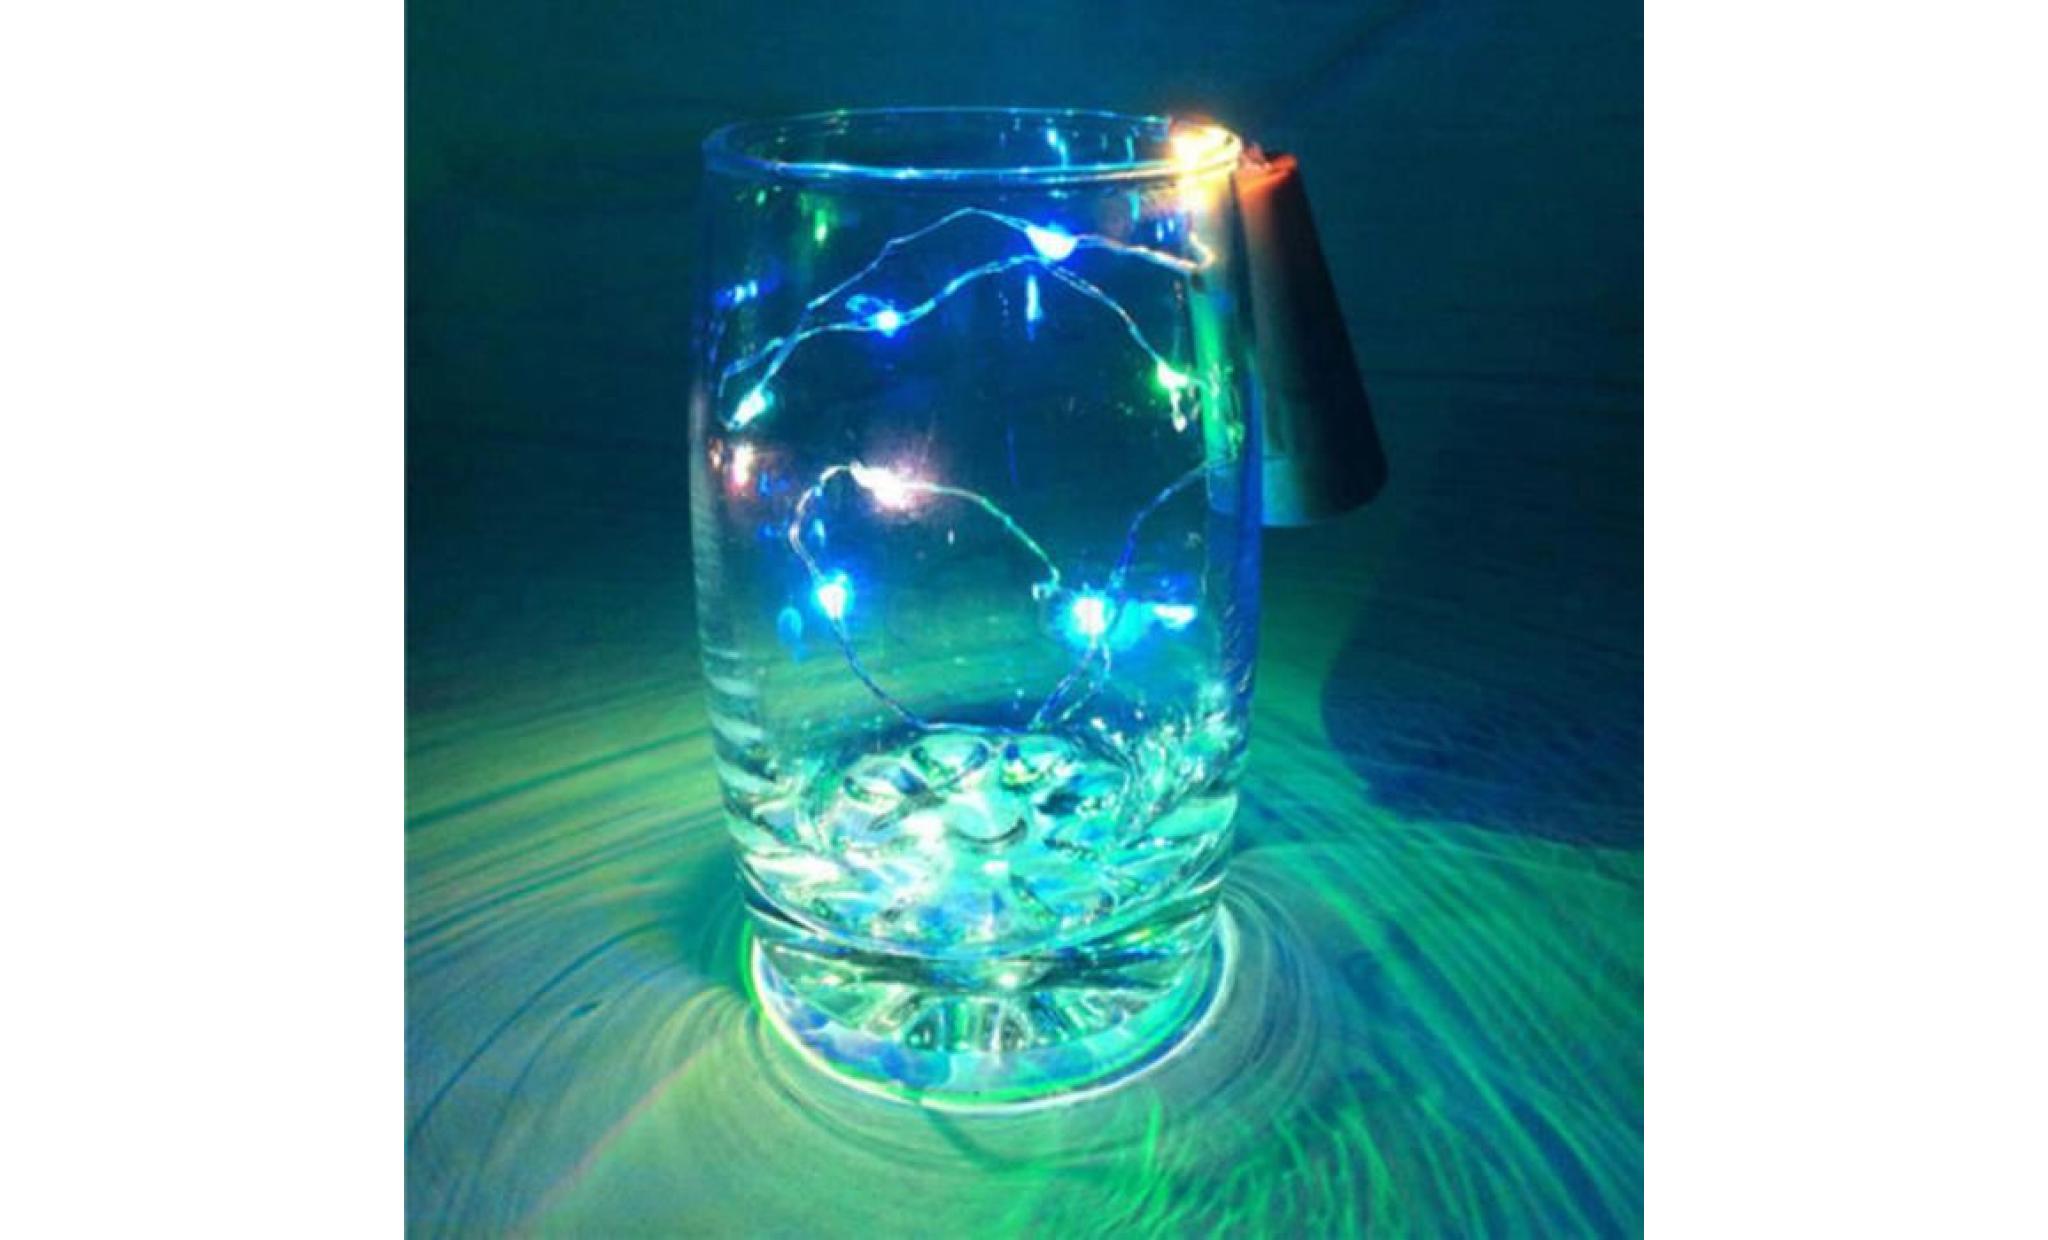 4pcs solar wine bottle cork shaped string light 8led night fairy light qinhig1096 pas cher